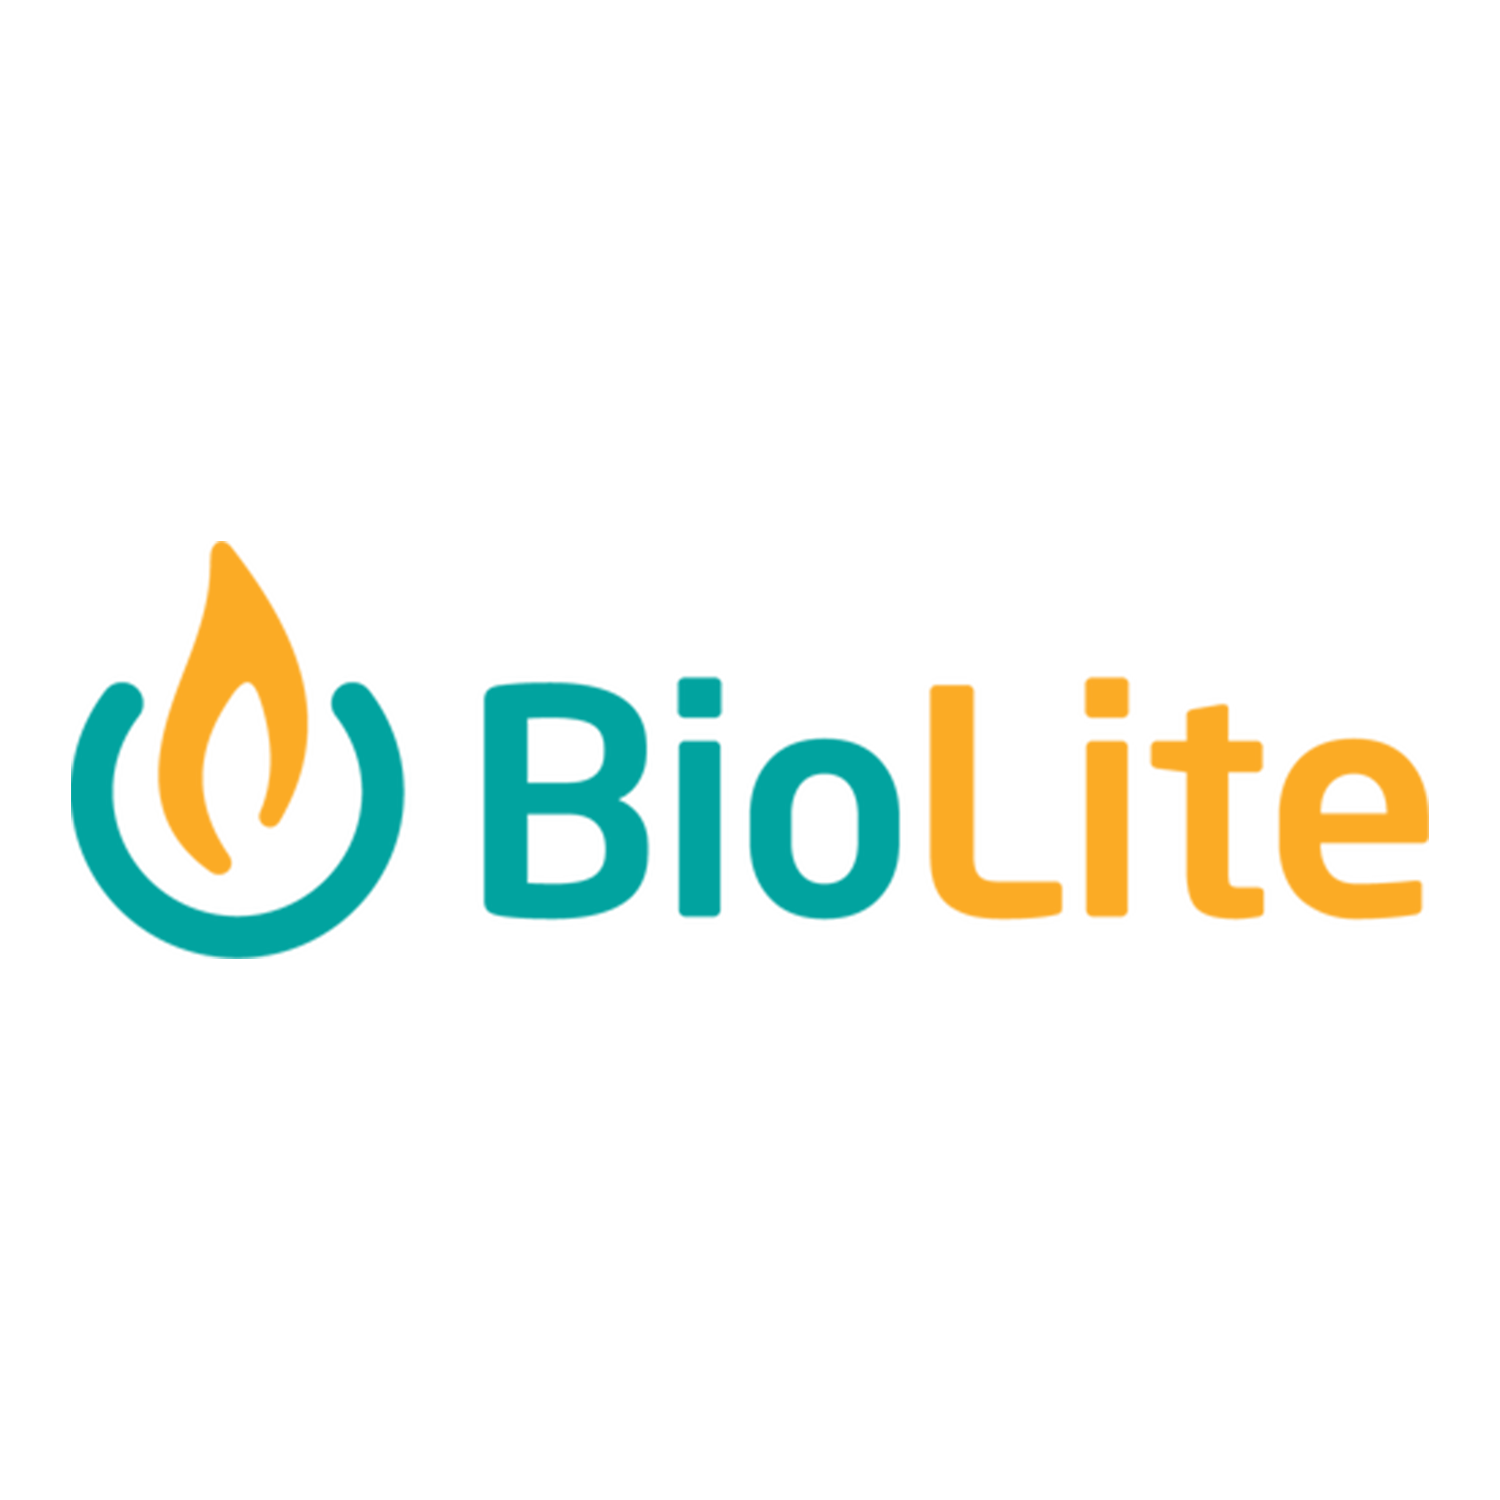 BioLite